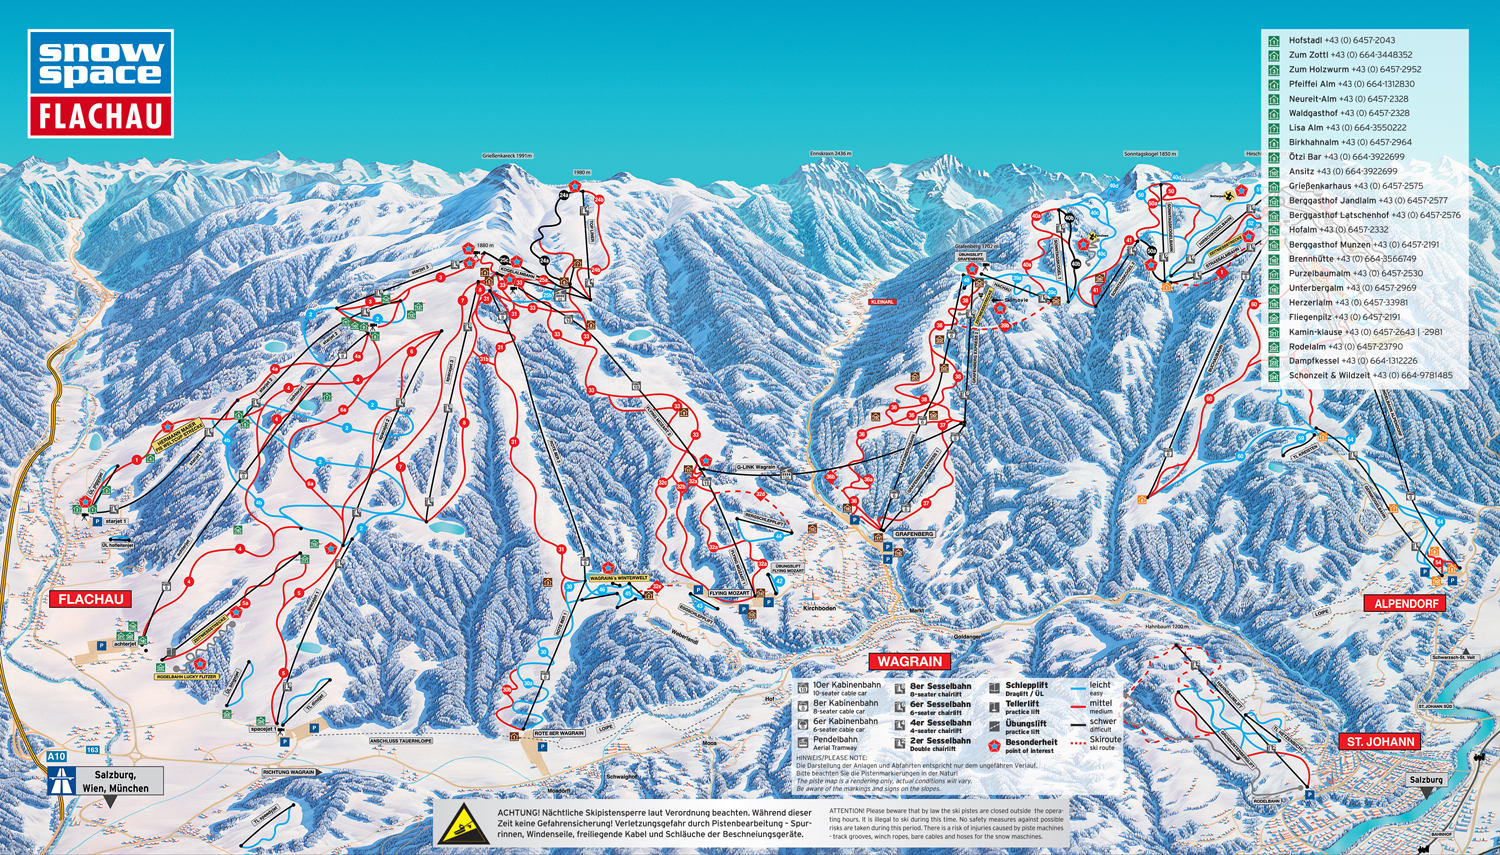 Skiline - General info about ski resort Flachau